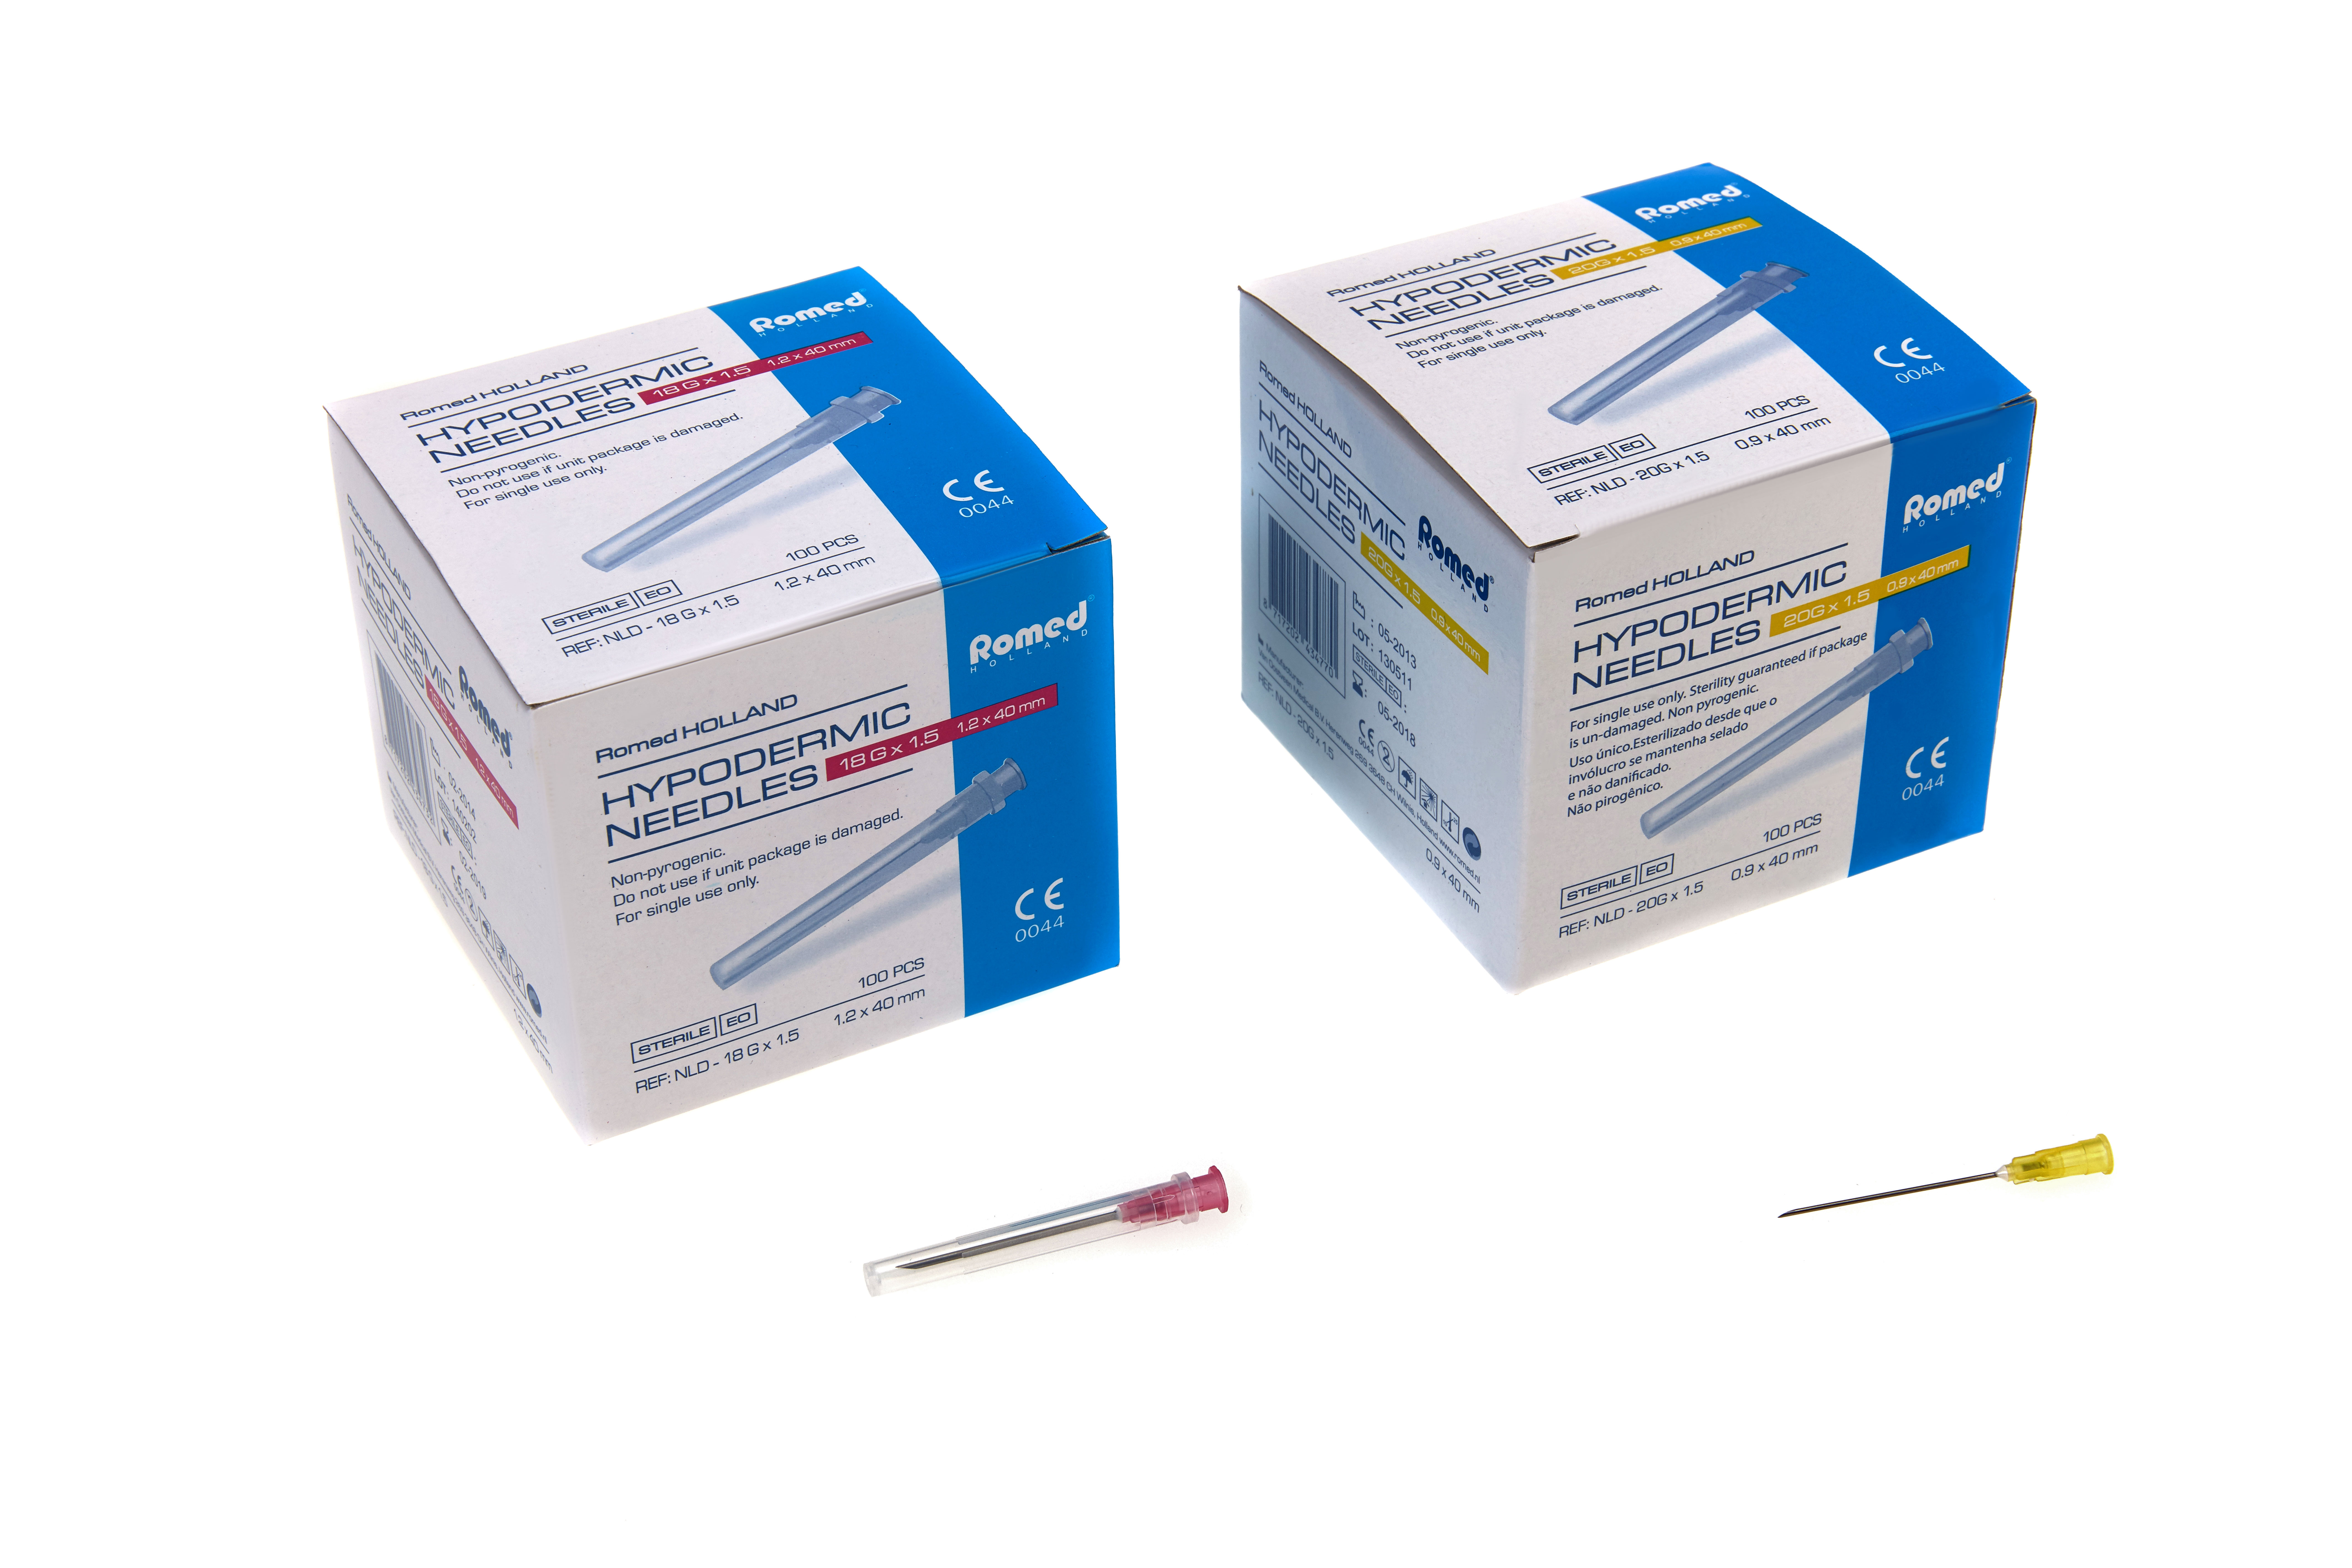 NLD-25GX1 Romed hypodermic needles, 25gx1", sterile per piece, 100 pcs in an inner box, 50 x 100 pcs = 5.000 pcs in a carton.